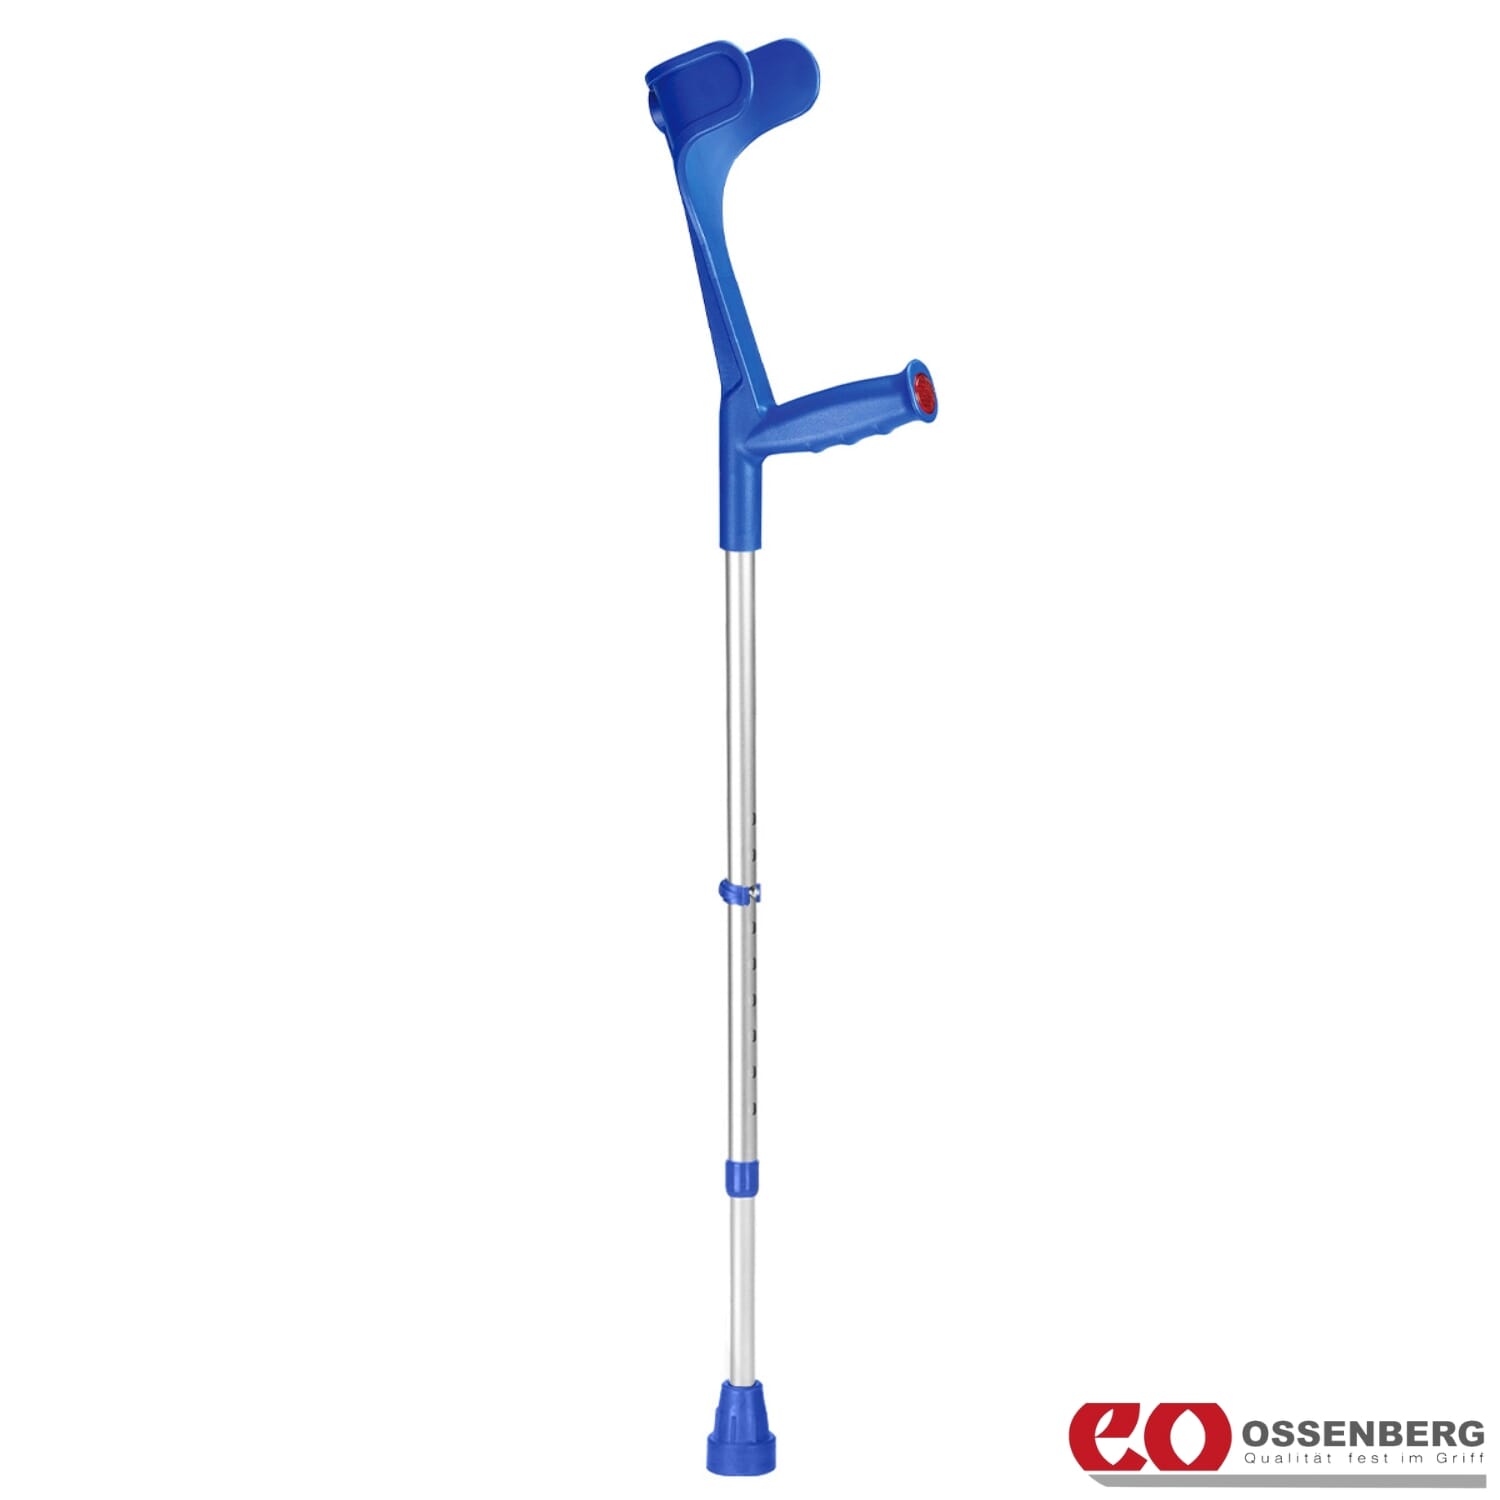 View Ossenberg Open Cuff Crutches Blue Single information